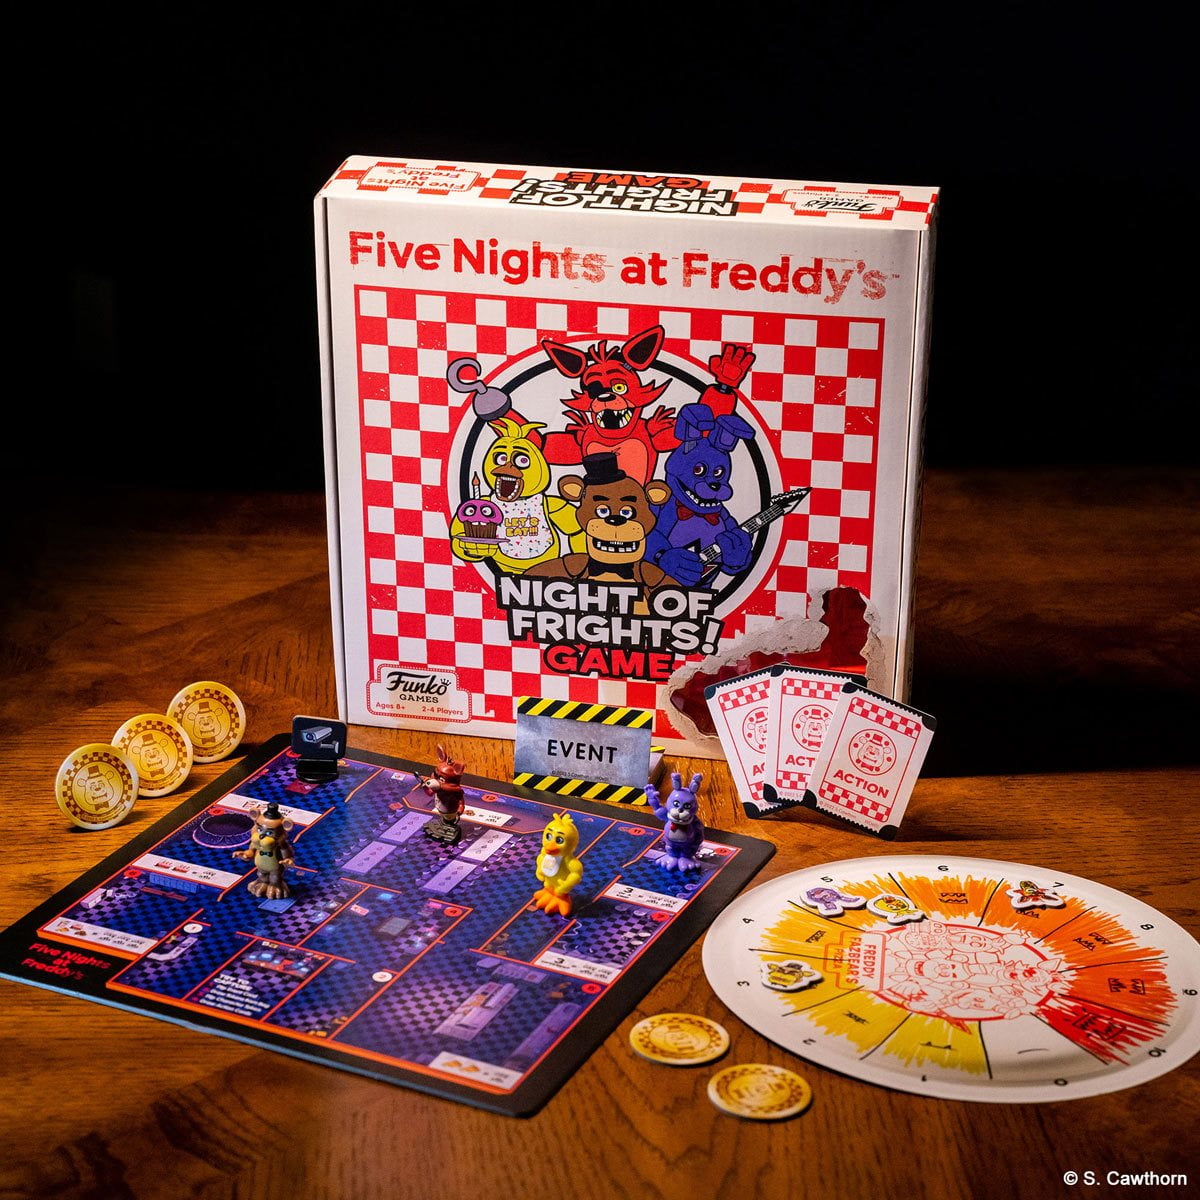 FNAF Games - Play Five Nights at Freddy's Games